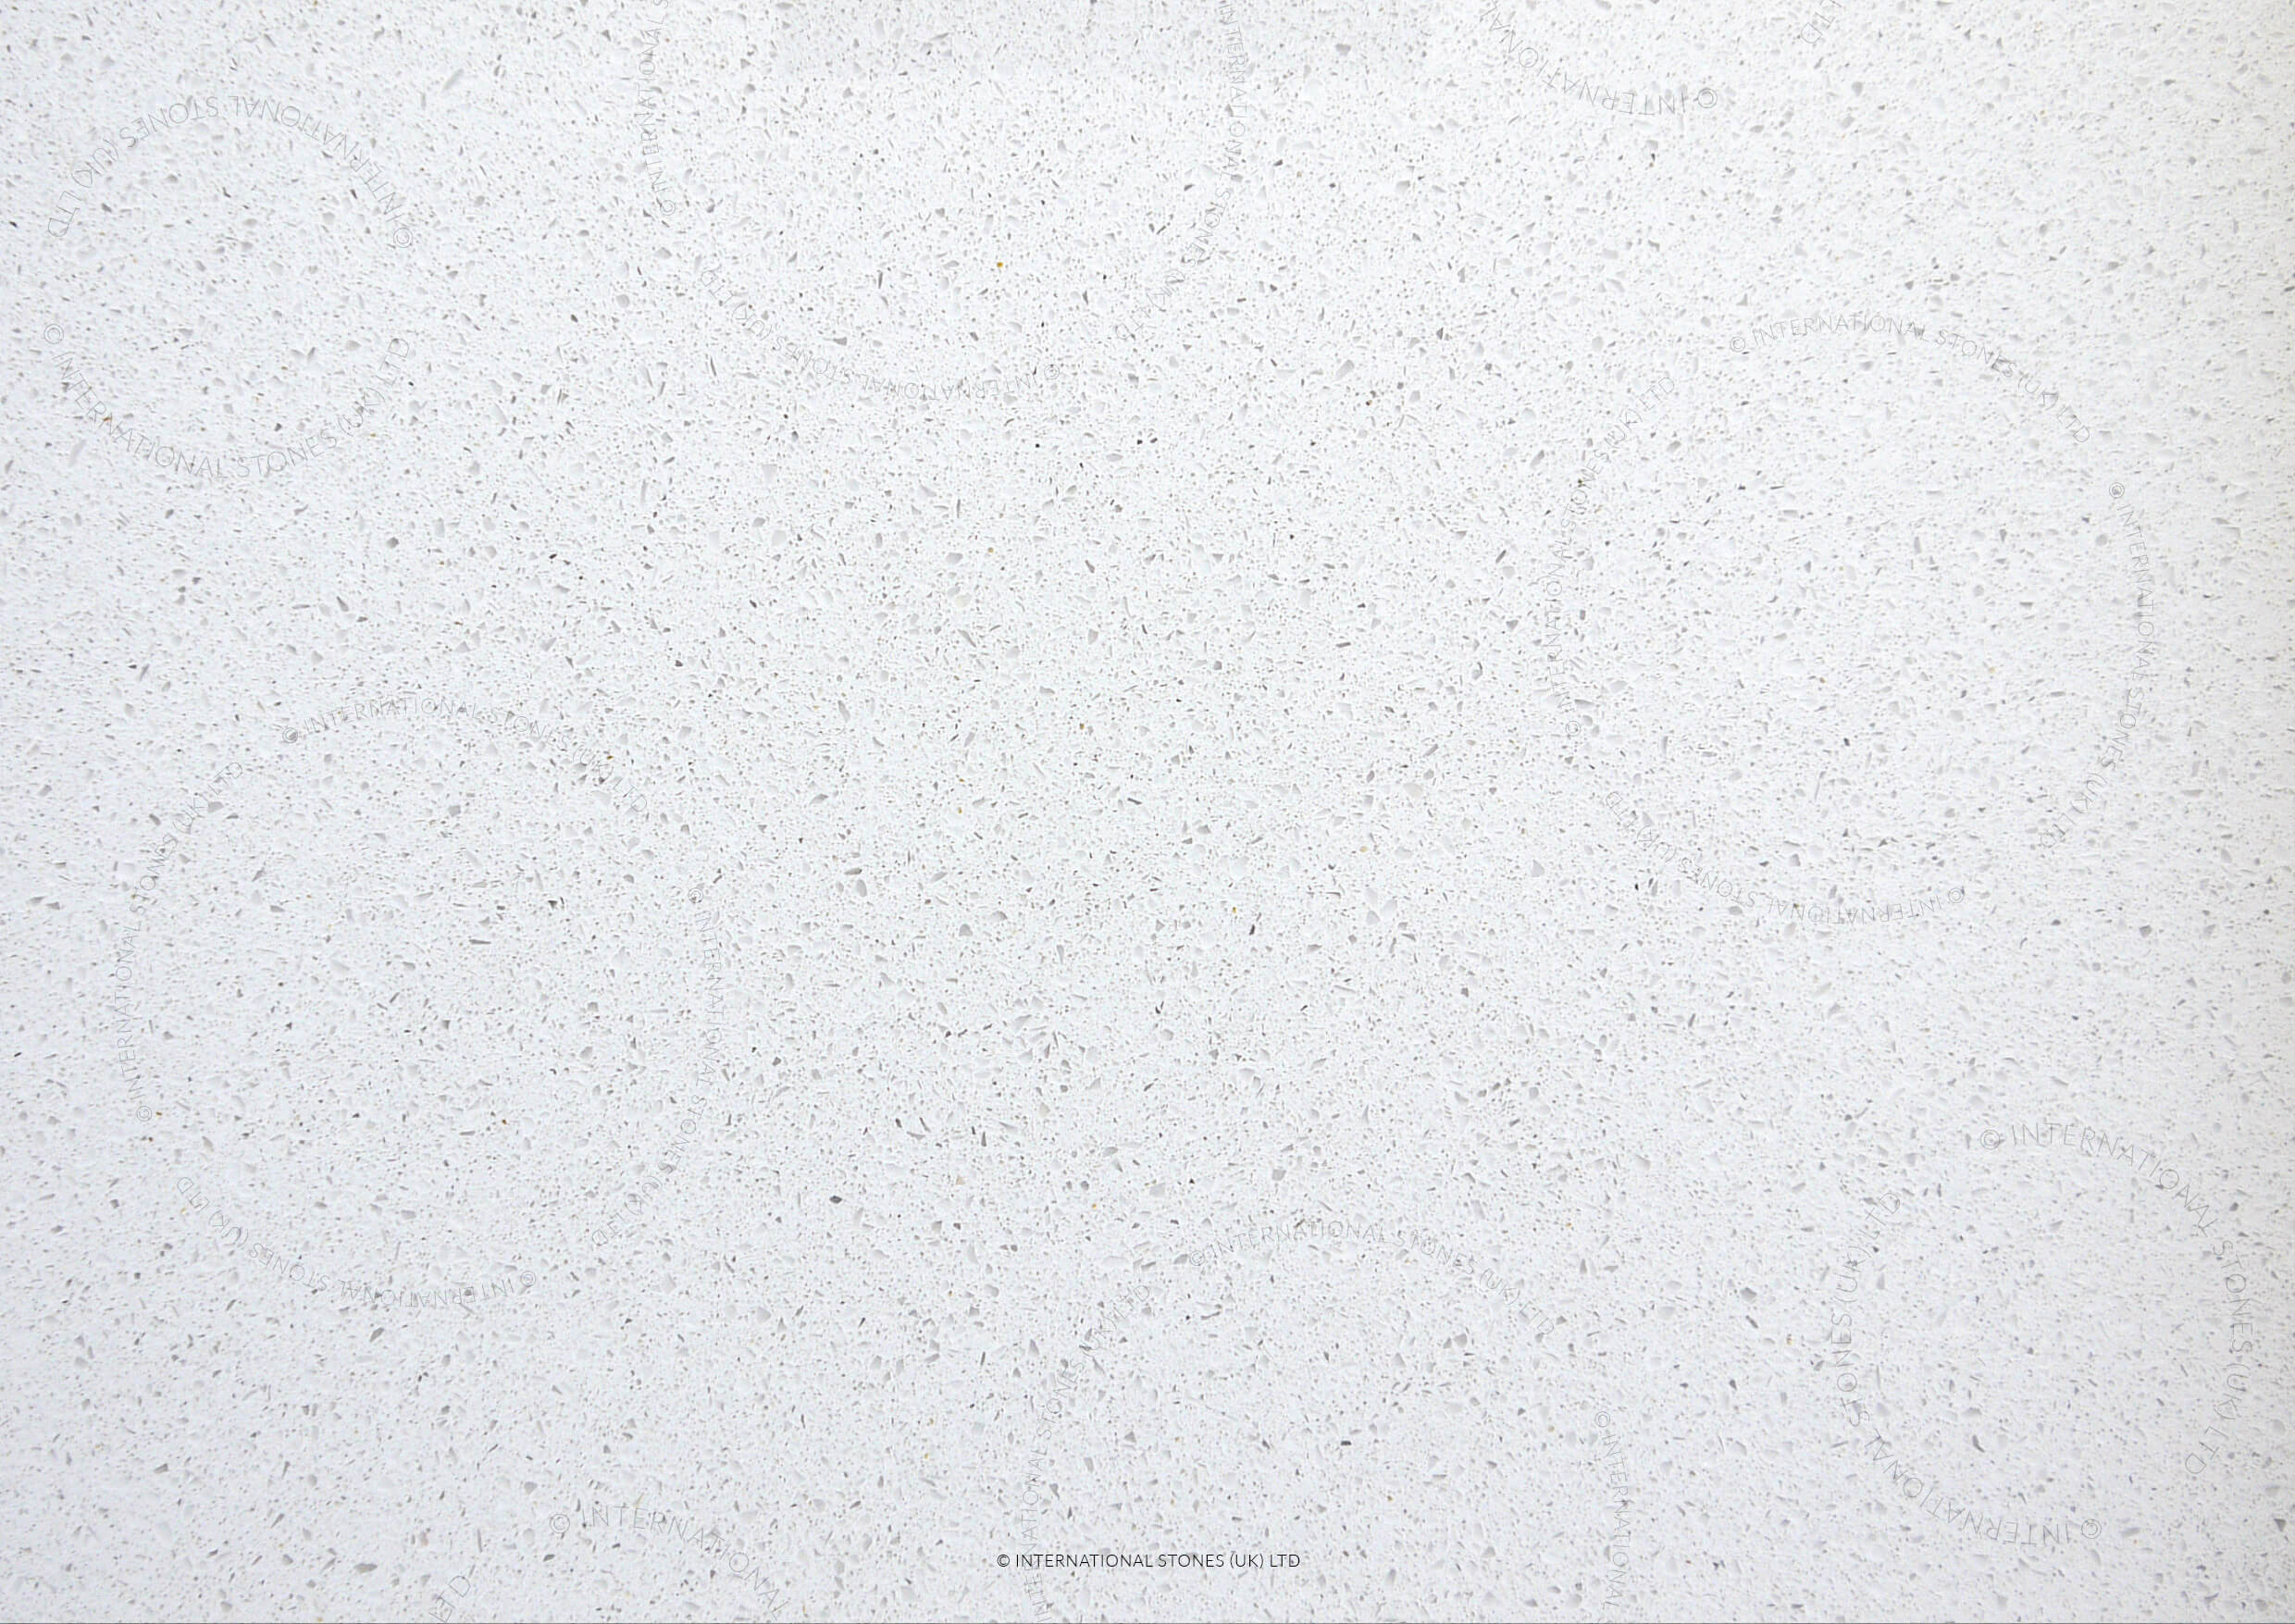 International Stone IQ Blanco Maple - South-Yorkshire - Edlington